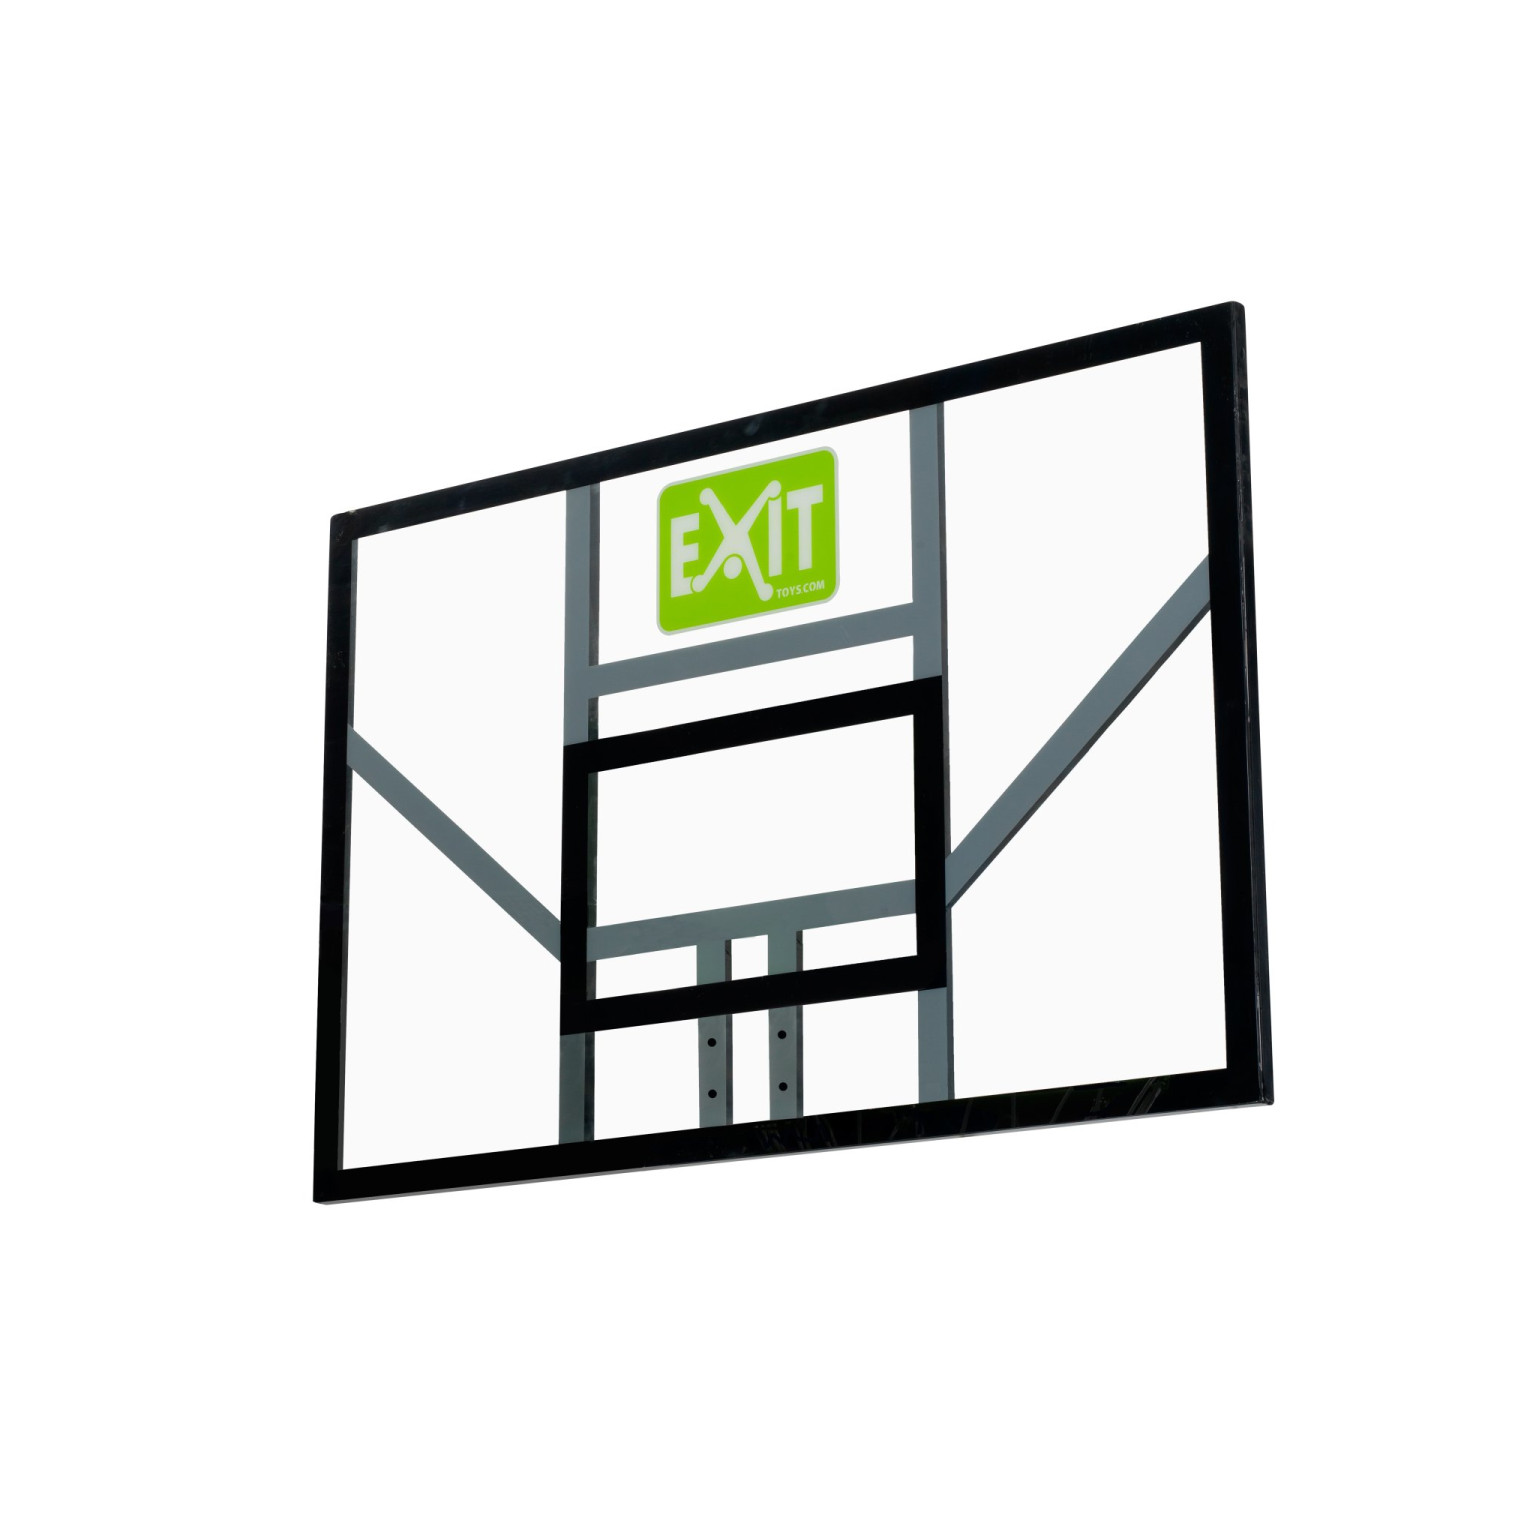 EXIT Galaxy basketbalbord - groen/zwart